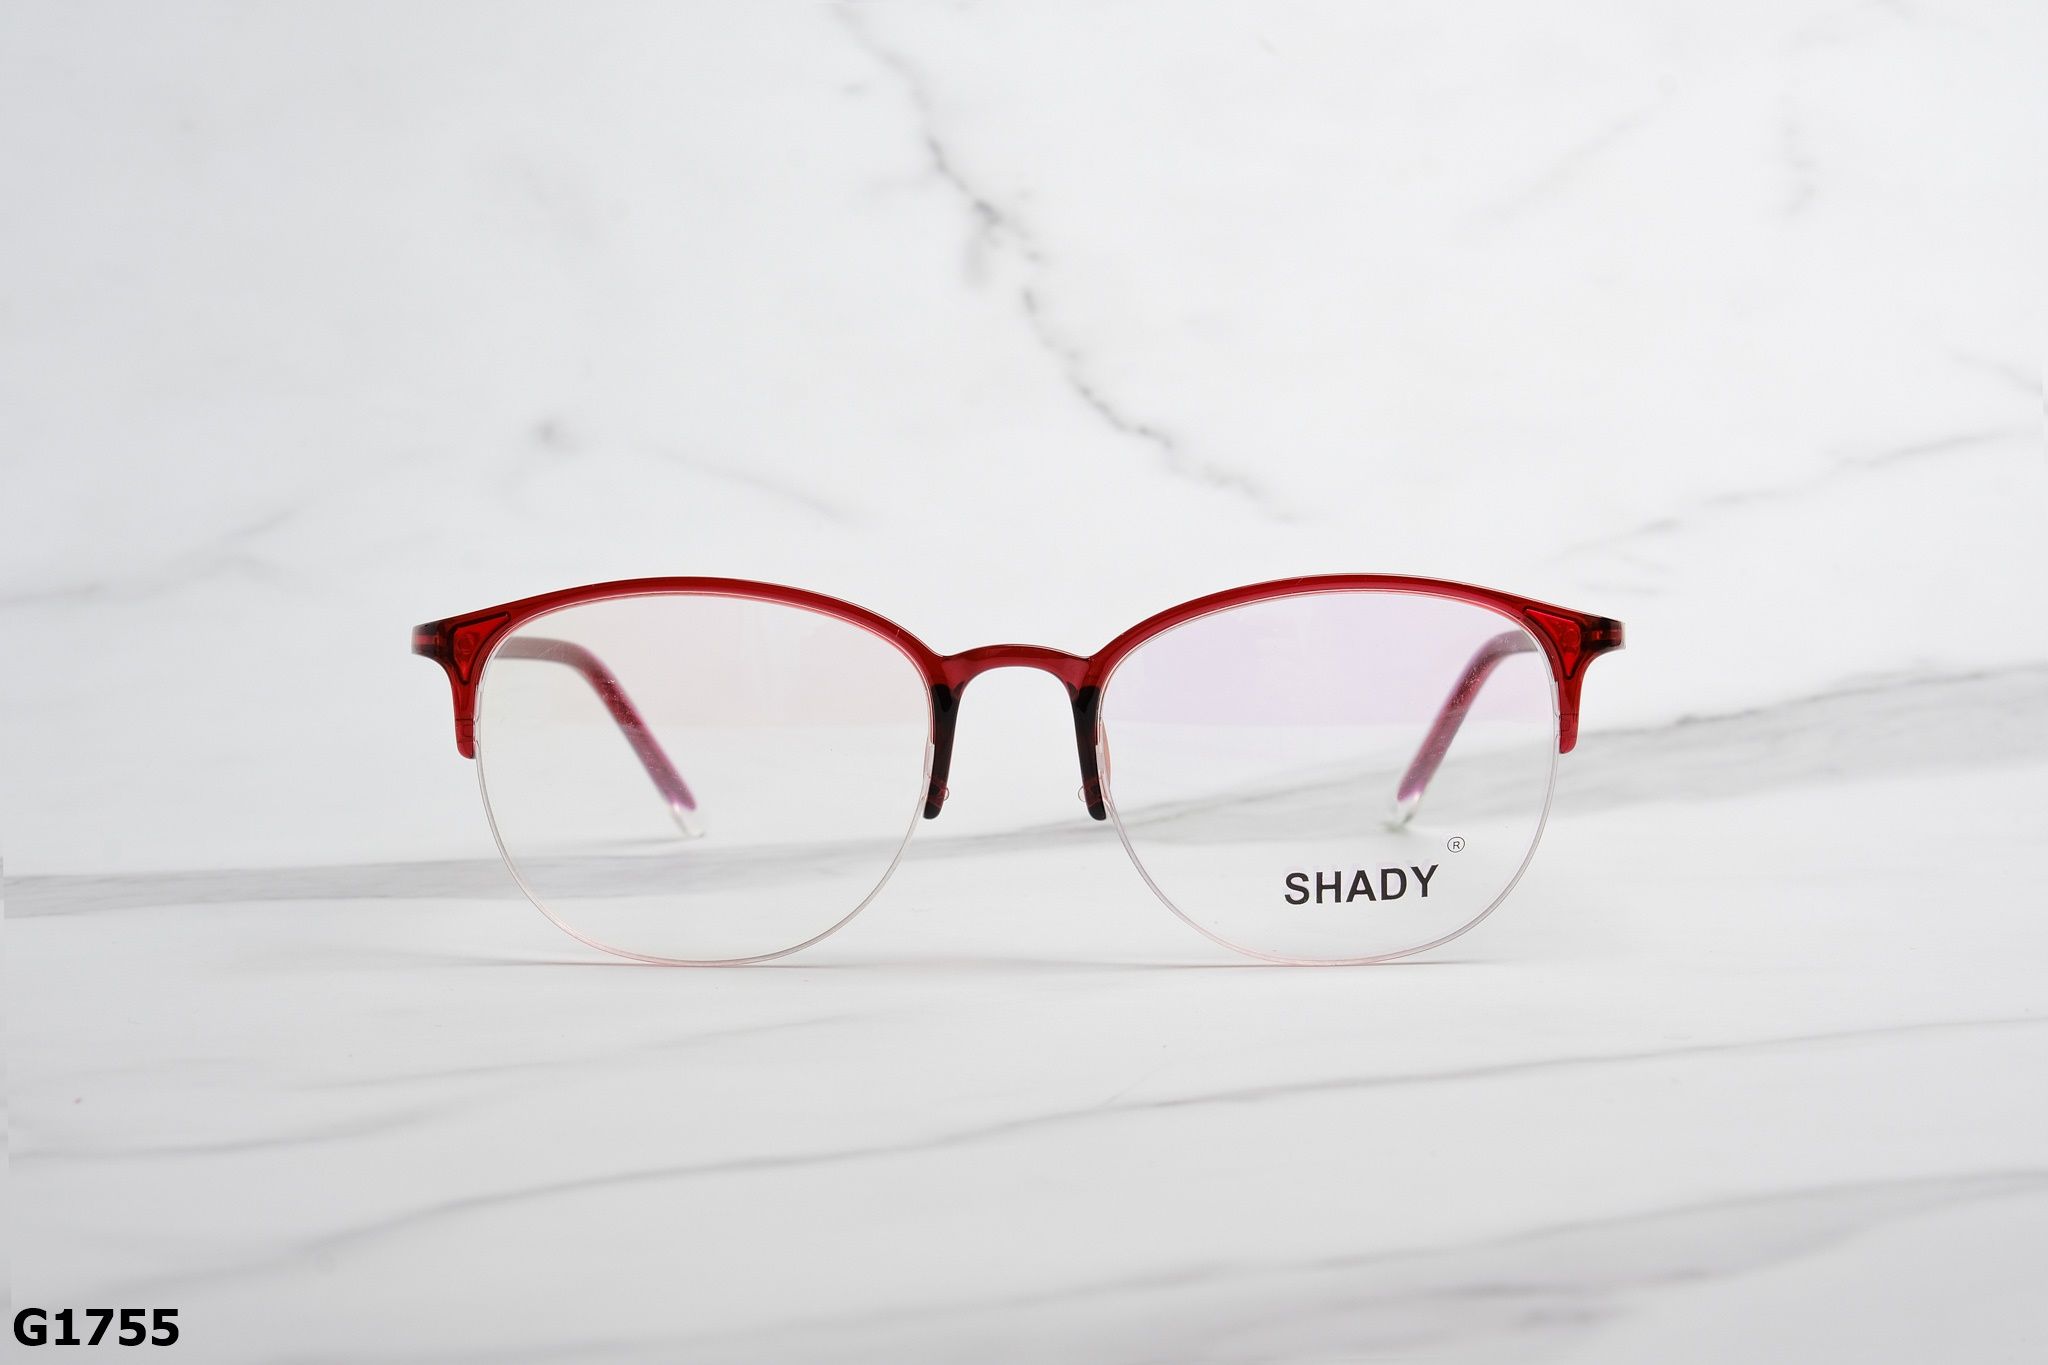  SHADY Eyewear - Glasses - G1755 